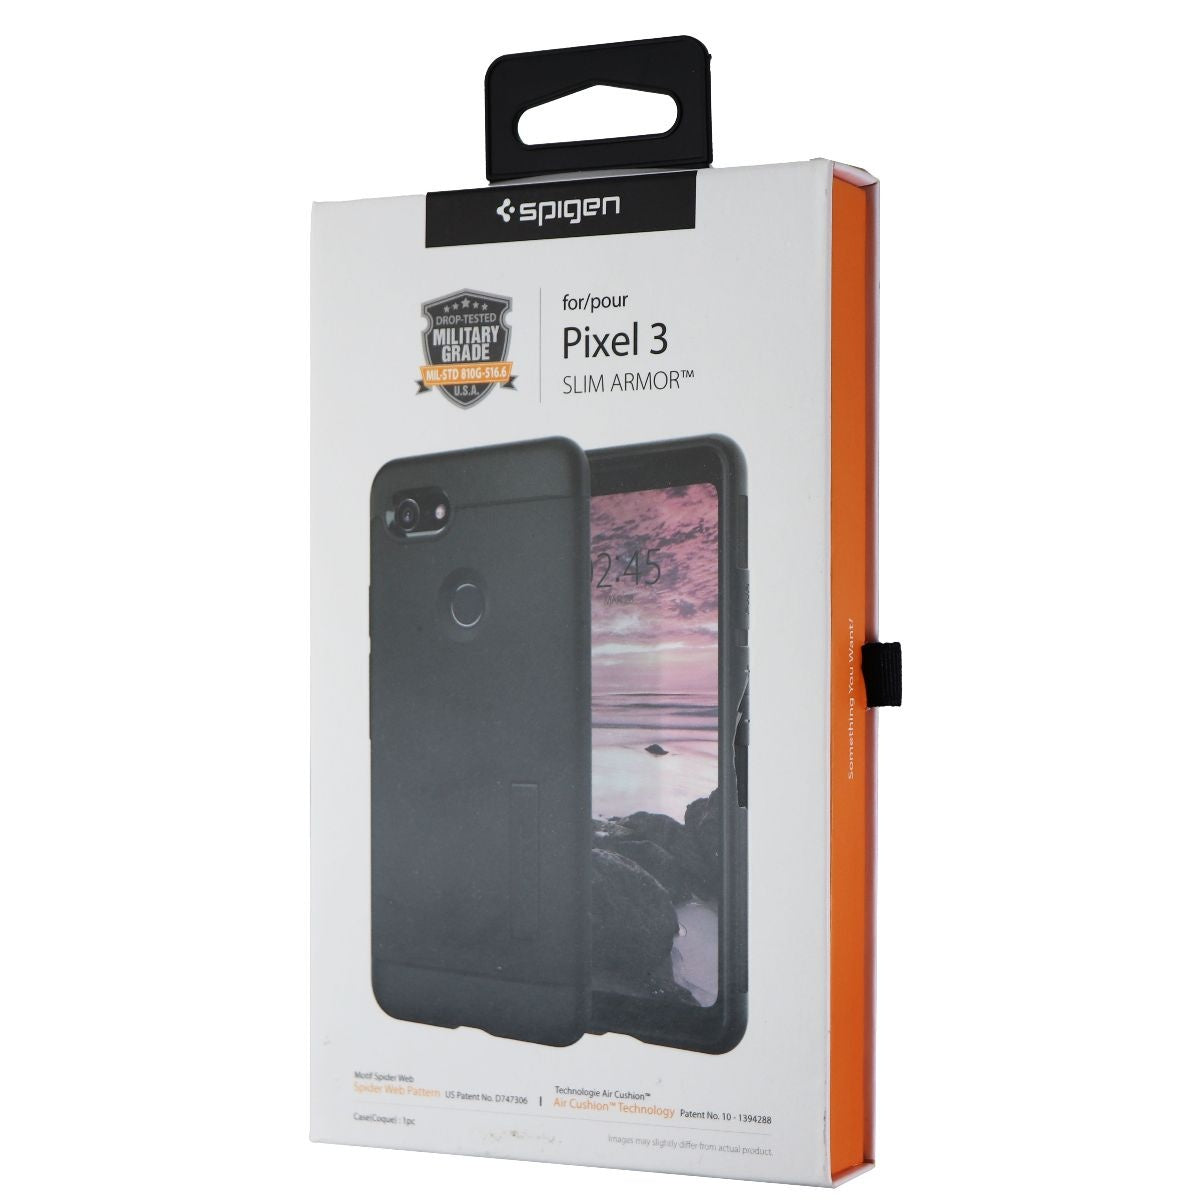 Spigen Slim Armor Series Dual Layer Case for Google Pixel 3 - Black Cell Phone - Cases, Covers & Skins Spigen    - Simple Cell Bulk Wholesale Pricing - USA Seller